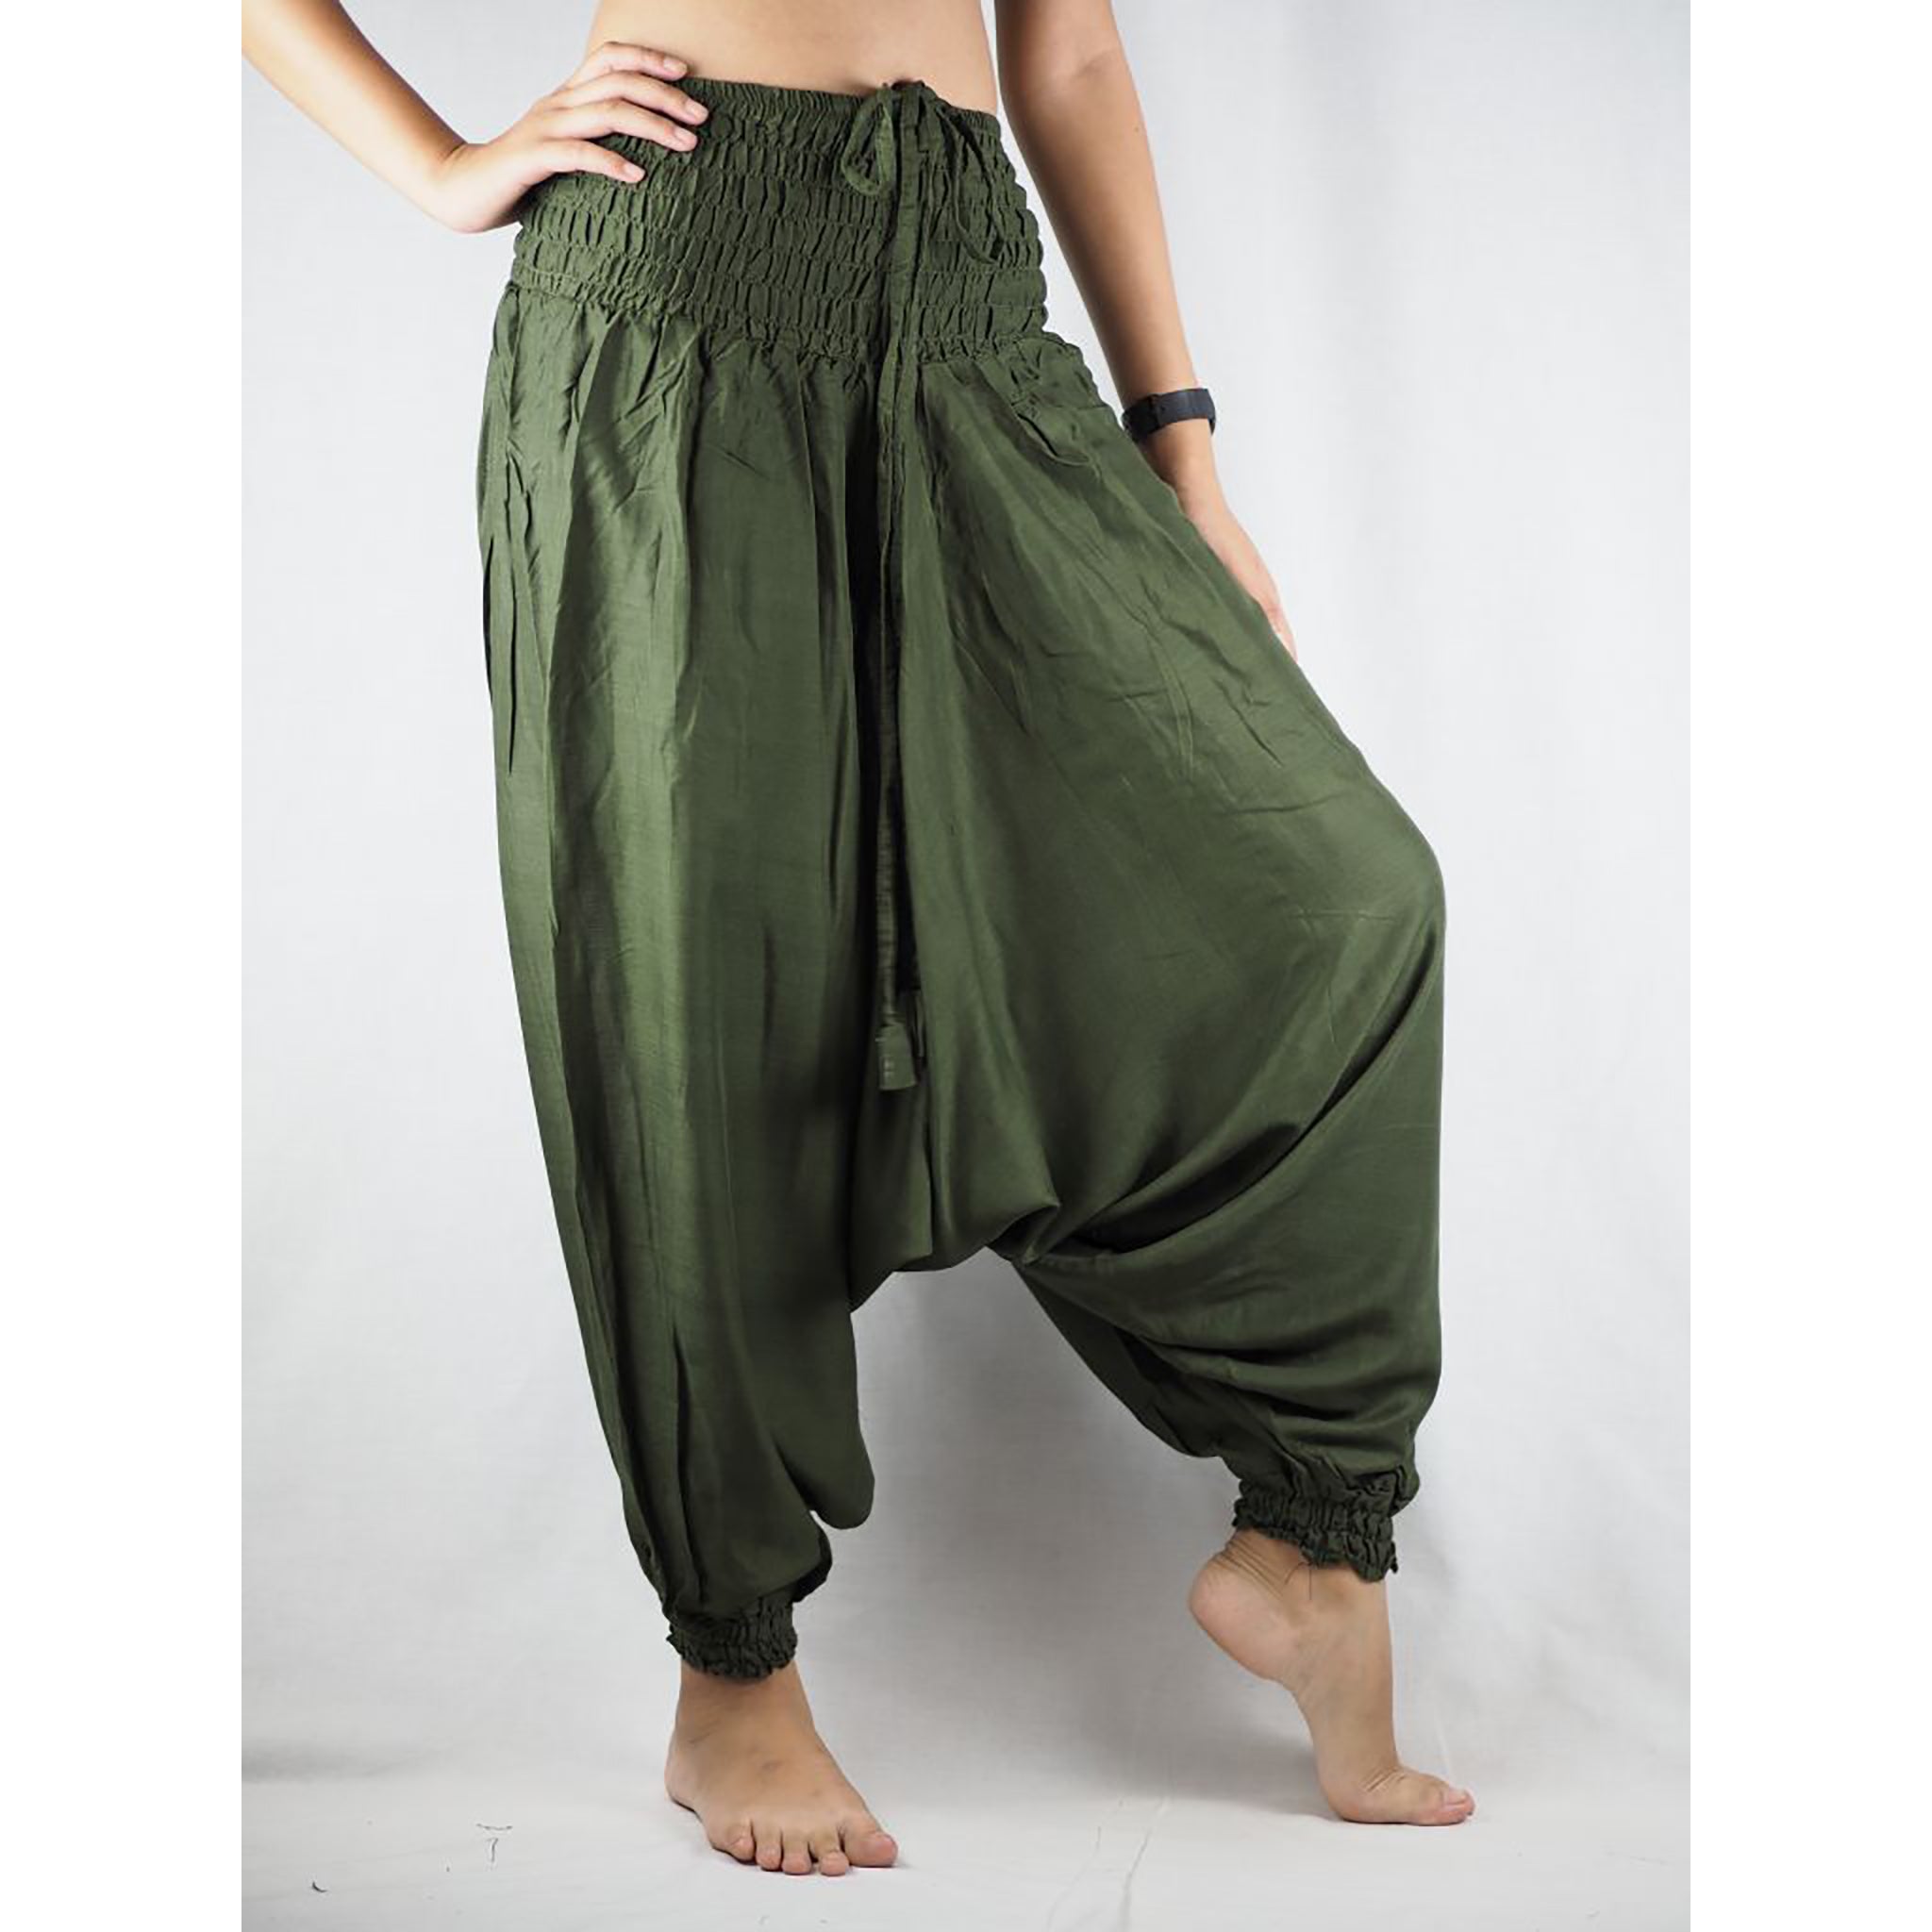 Funky Harem Boho Drop Crotch Olive Charcoal Cotton Jersey Capri Pants,  Avant Garde Pants With Front Pocket and Elastic Waist 